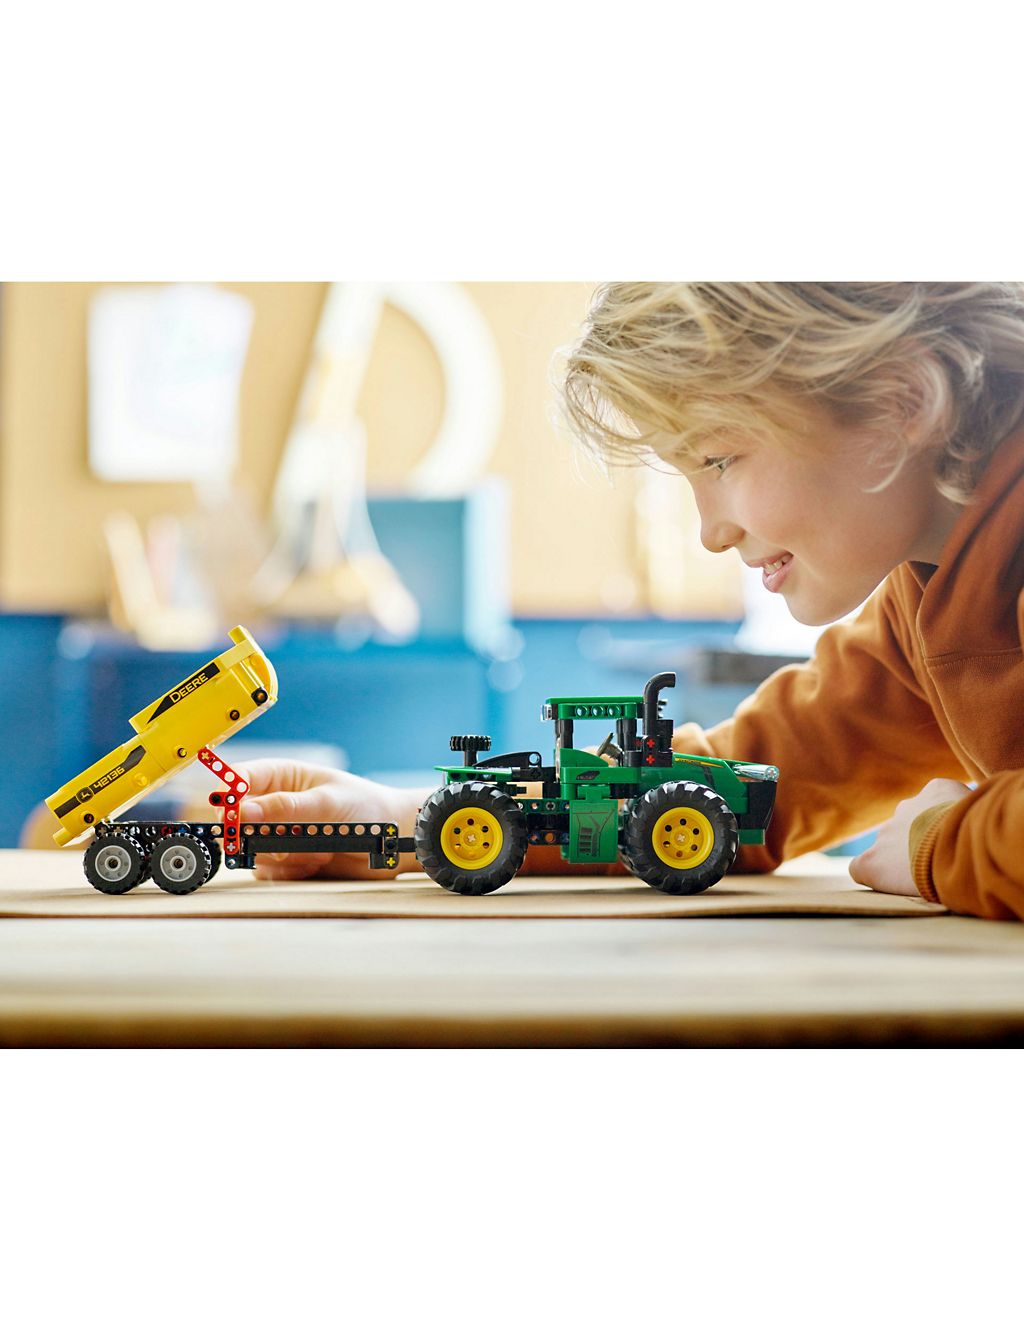 LEGO® Technic John Deere 9620R 4WD Tractor 42136 (8+ yrs) 2 of 4